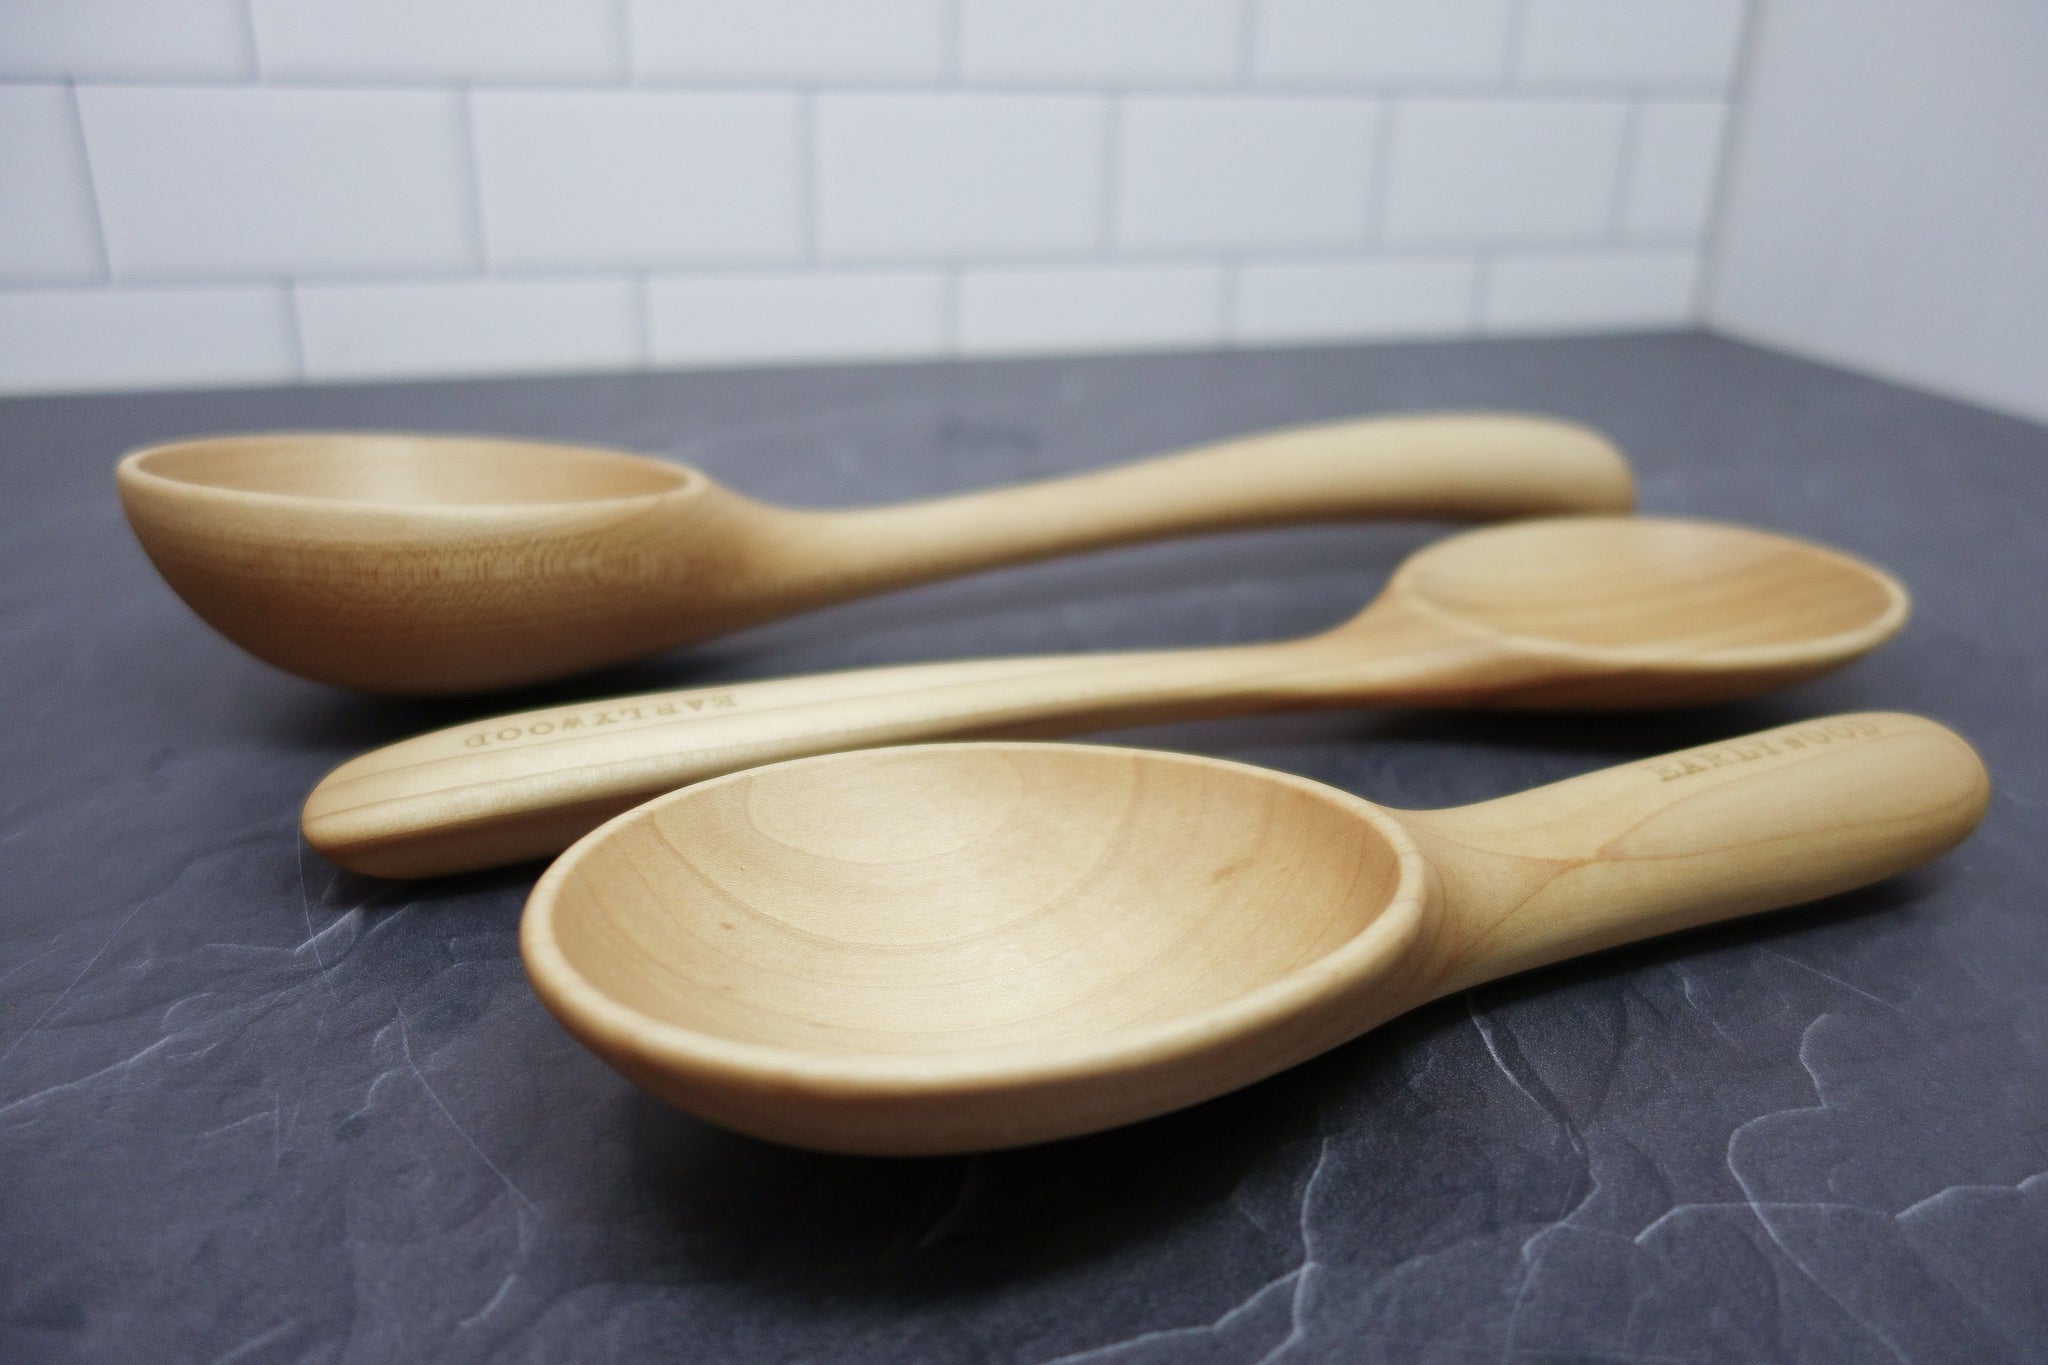 3 Piece Wooden Spoon Set